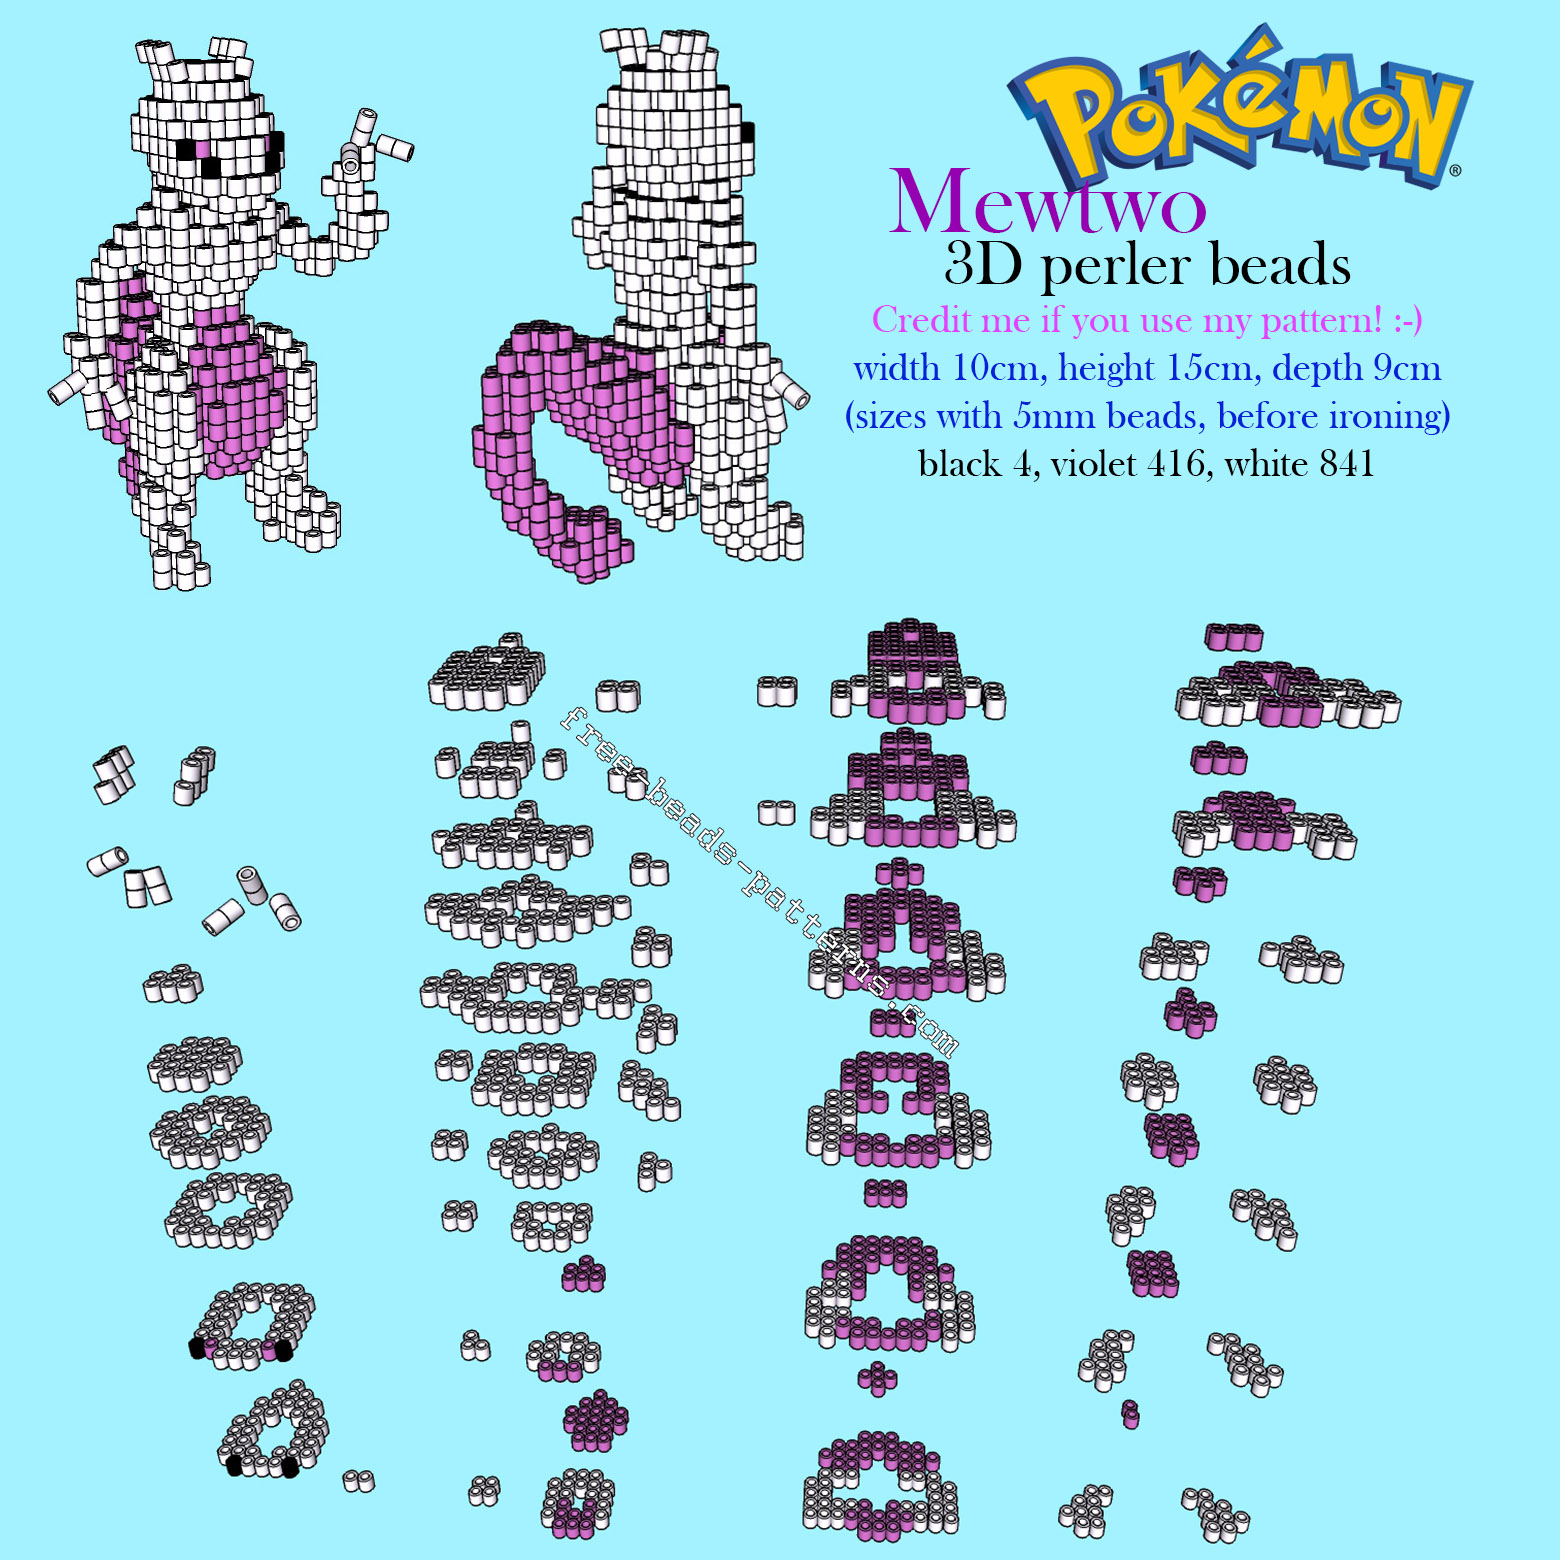 Mewtwo Pokemon 3D perler beads hama beads pixelart free pattern tutorial